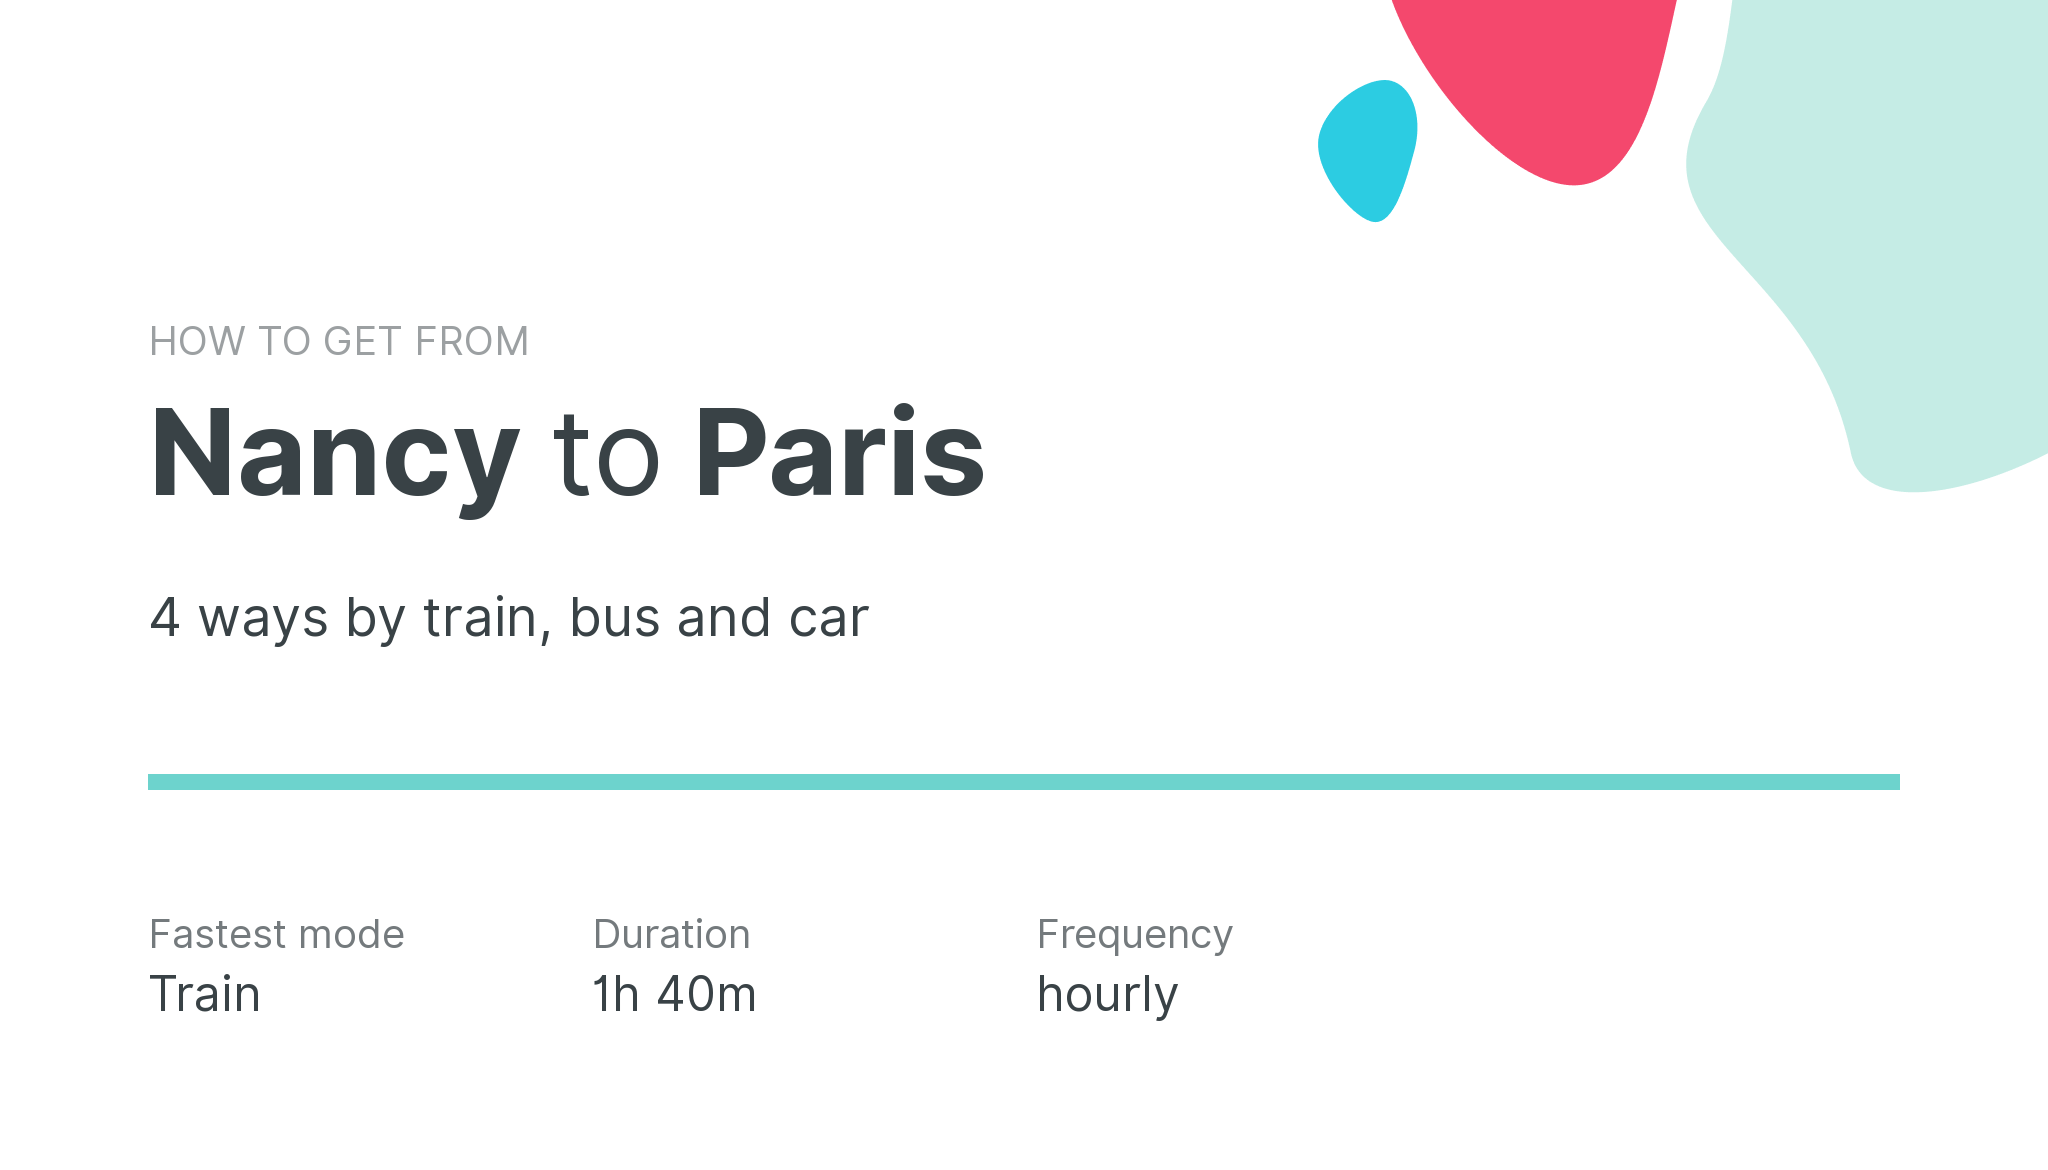 How do I get from Nancy to Paris